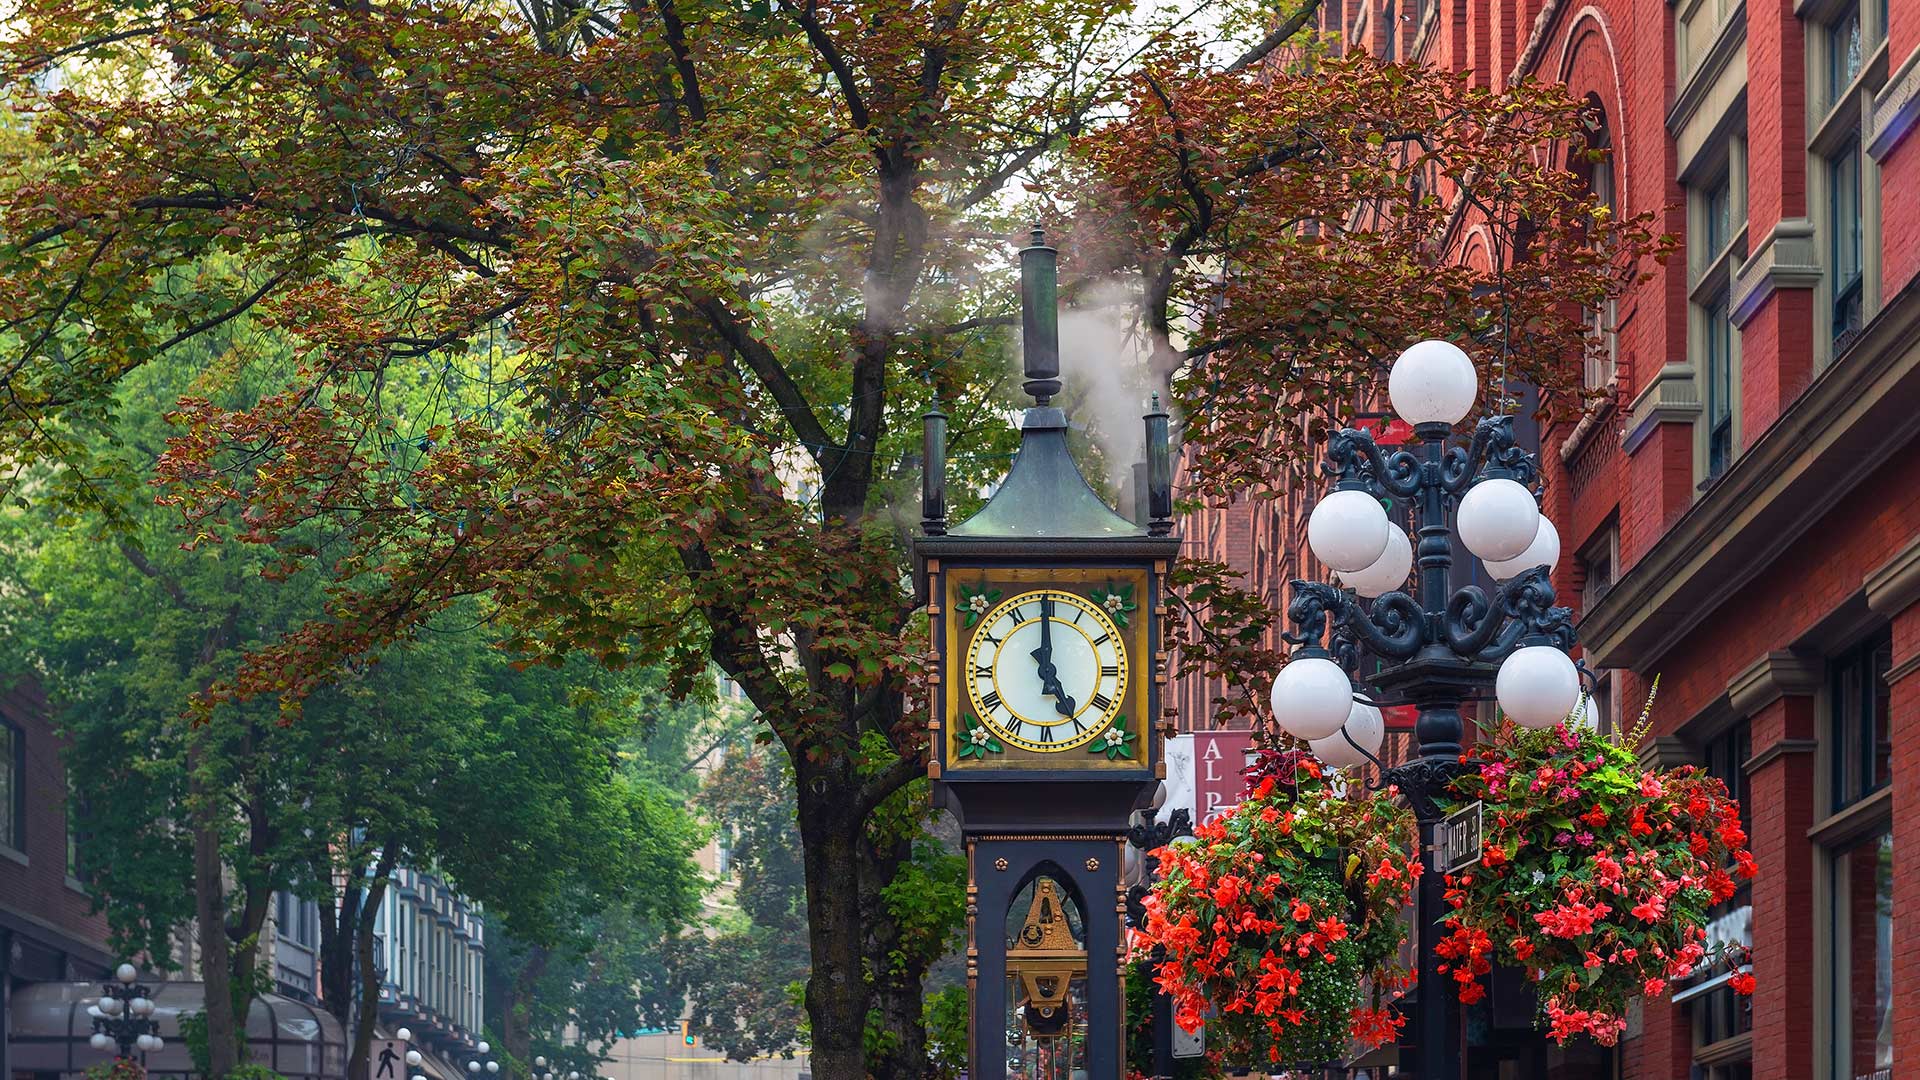 Gaston steam clock in Vancouver